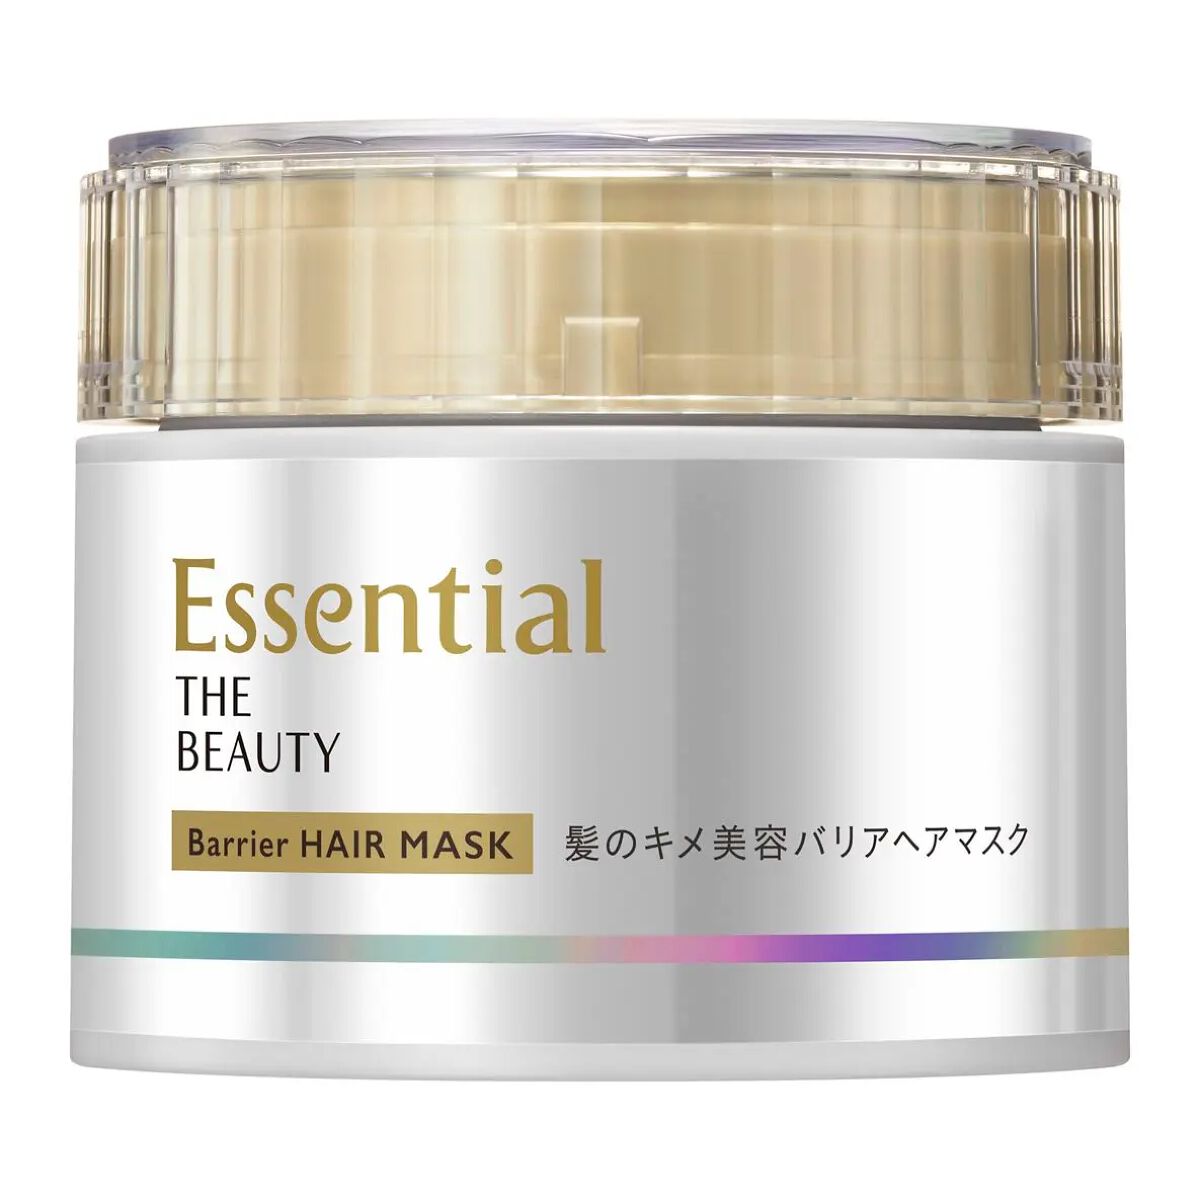 Essential THE BEAUTY 髪のキメ美容バリアヘアマスク エッセンシャルの効果の口コミ 327件 LIPS